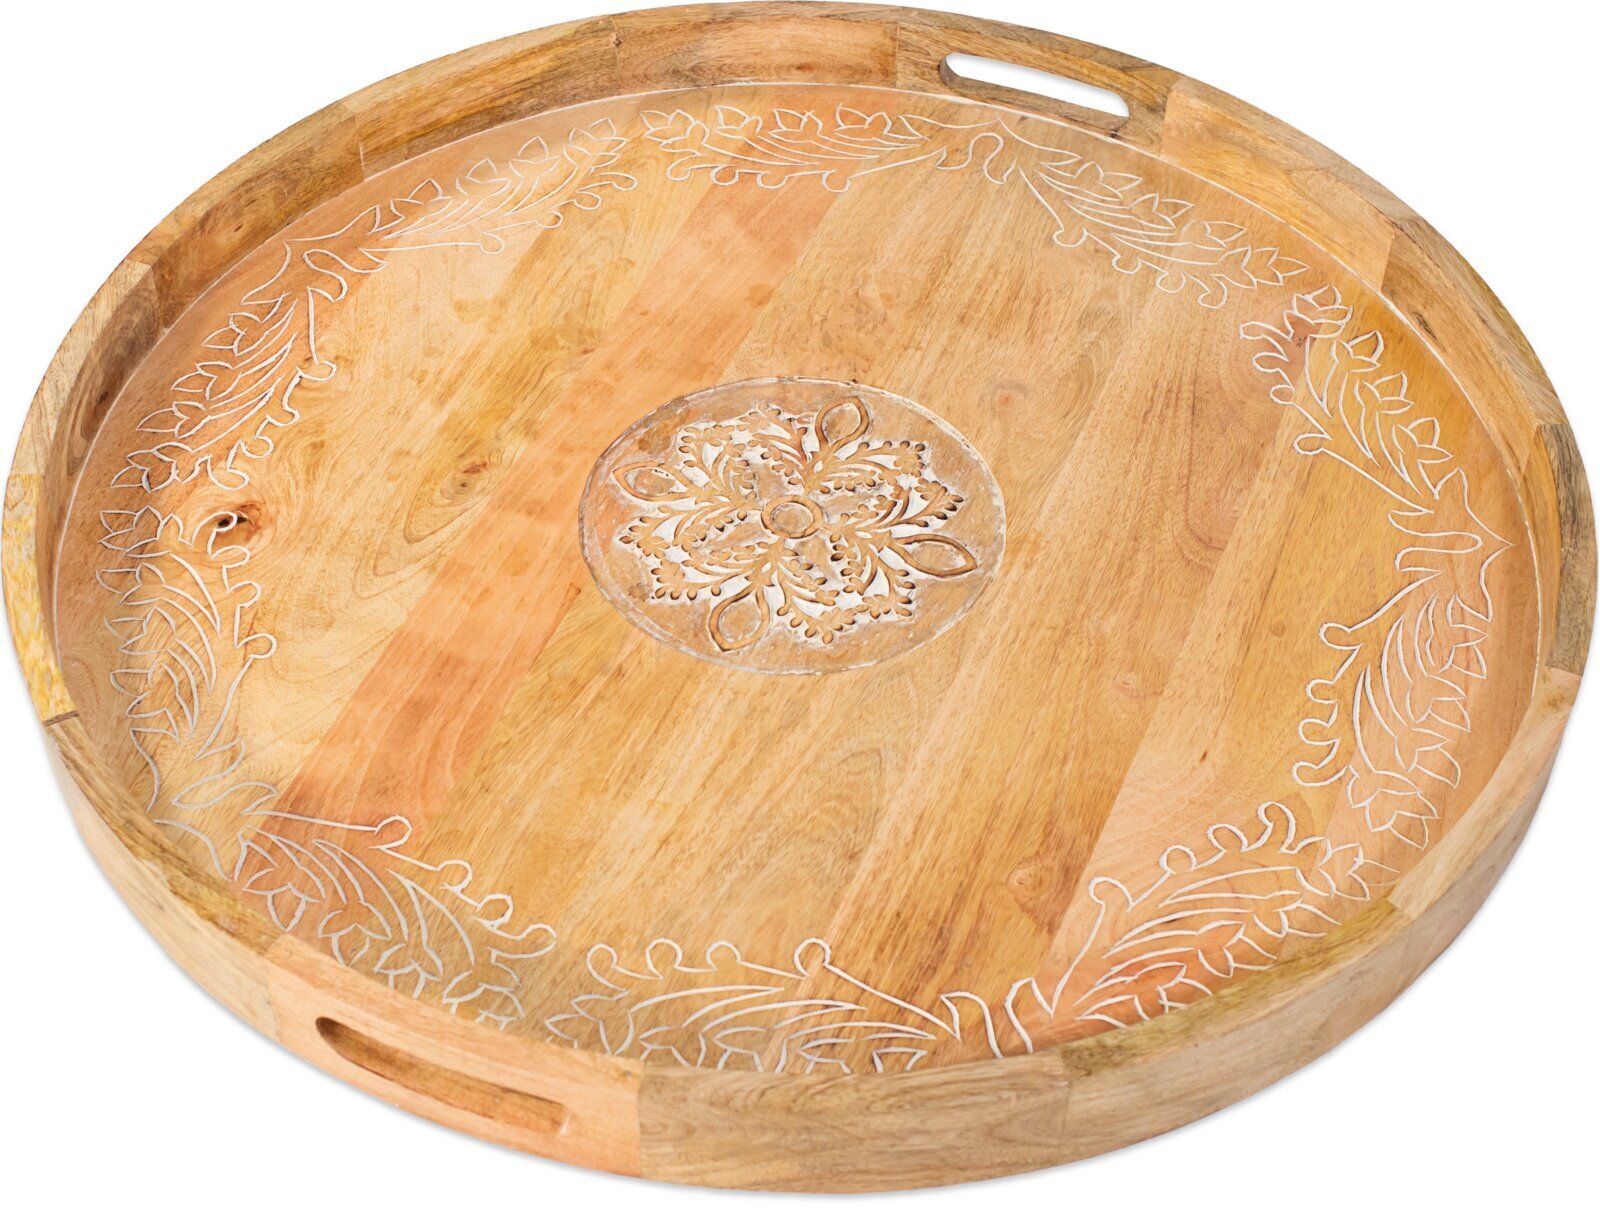 Carved Decorative Ottoman Tray